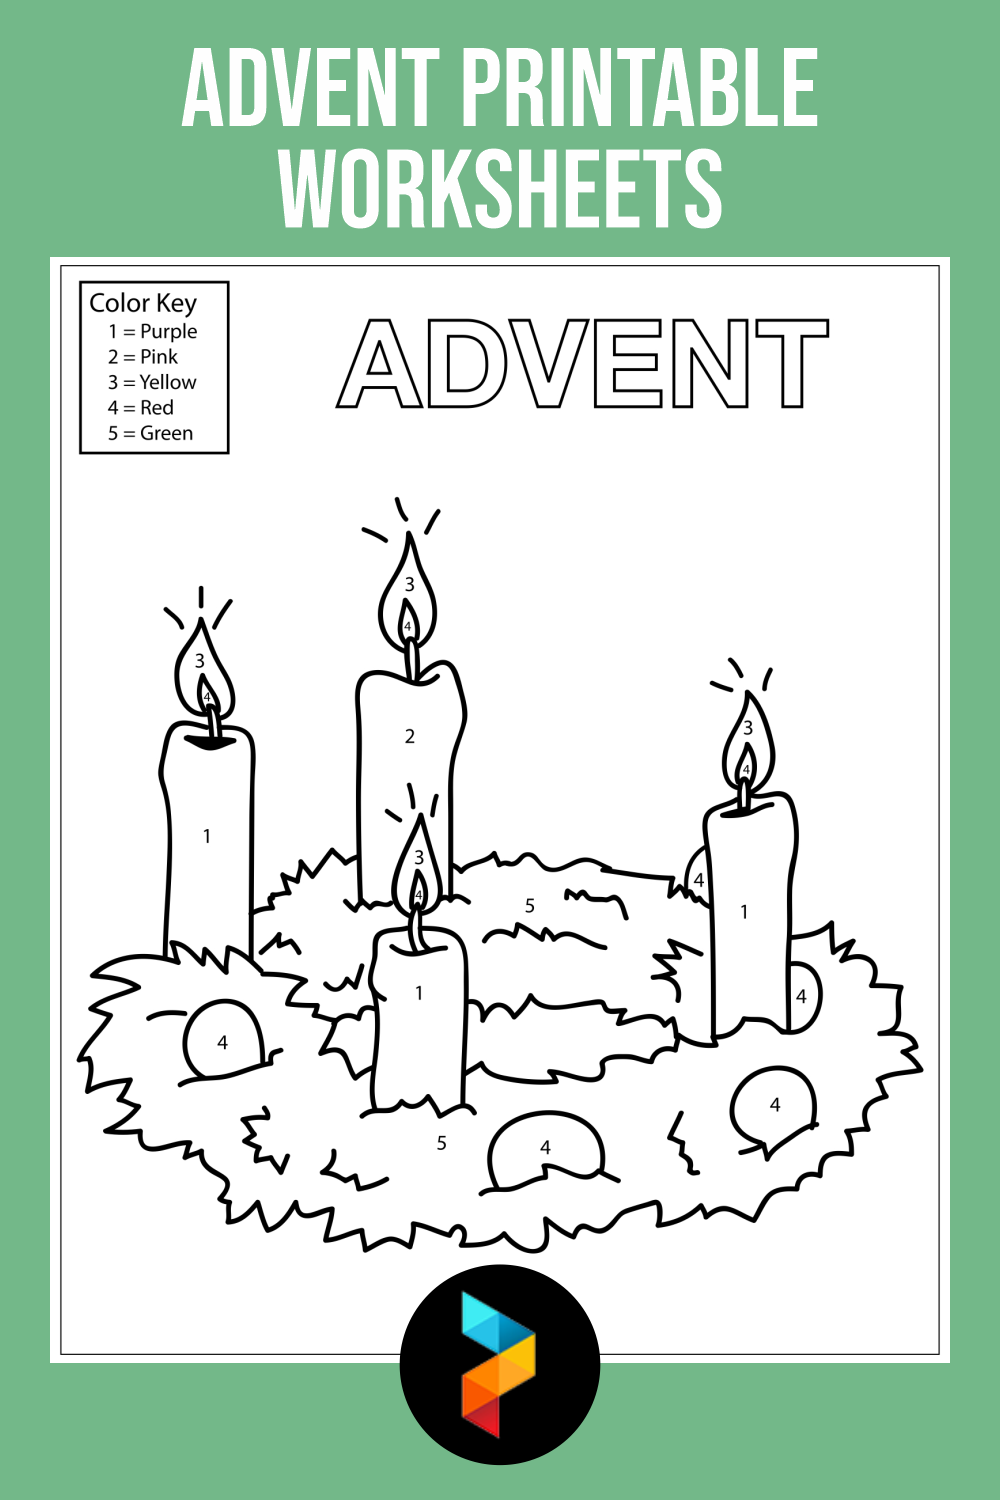 Advent Printable Worksheets